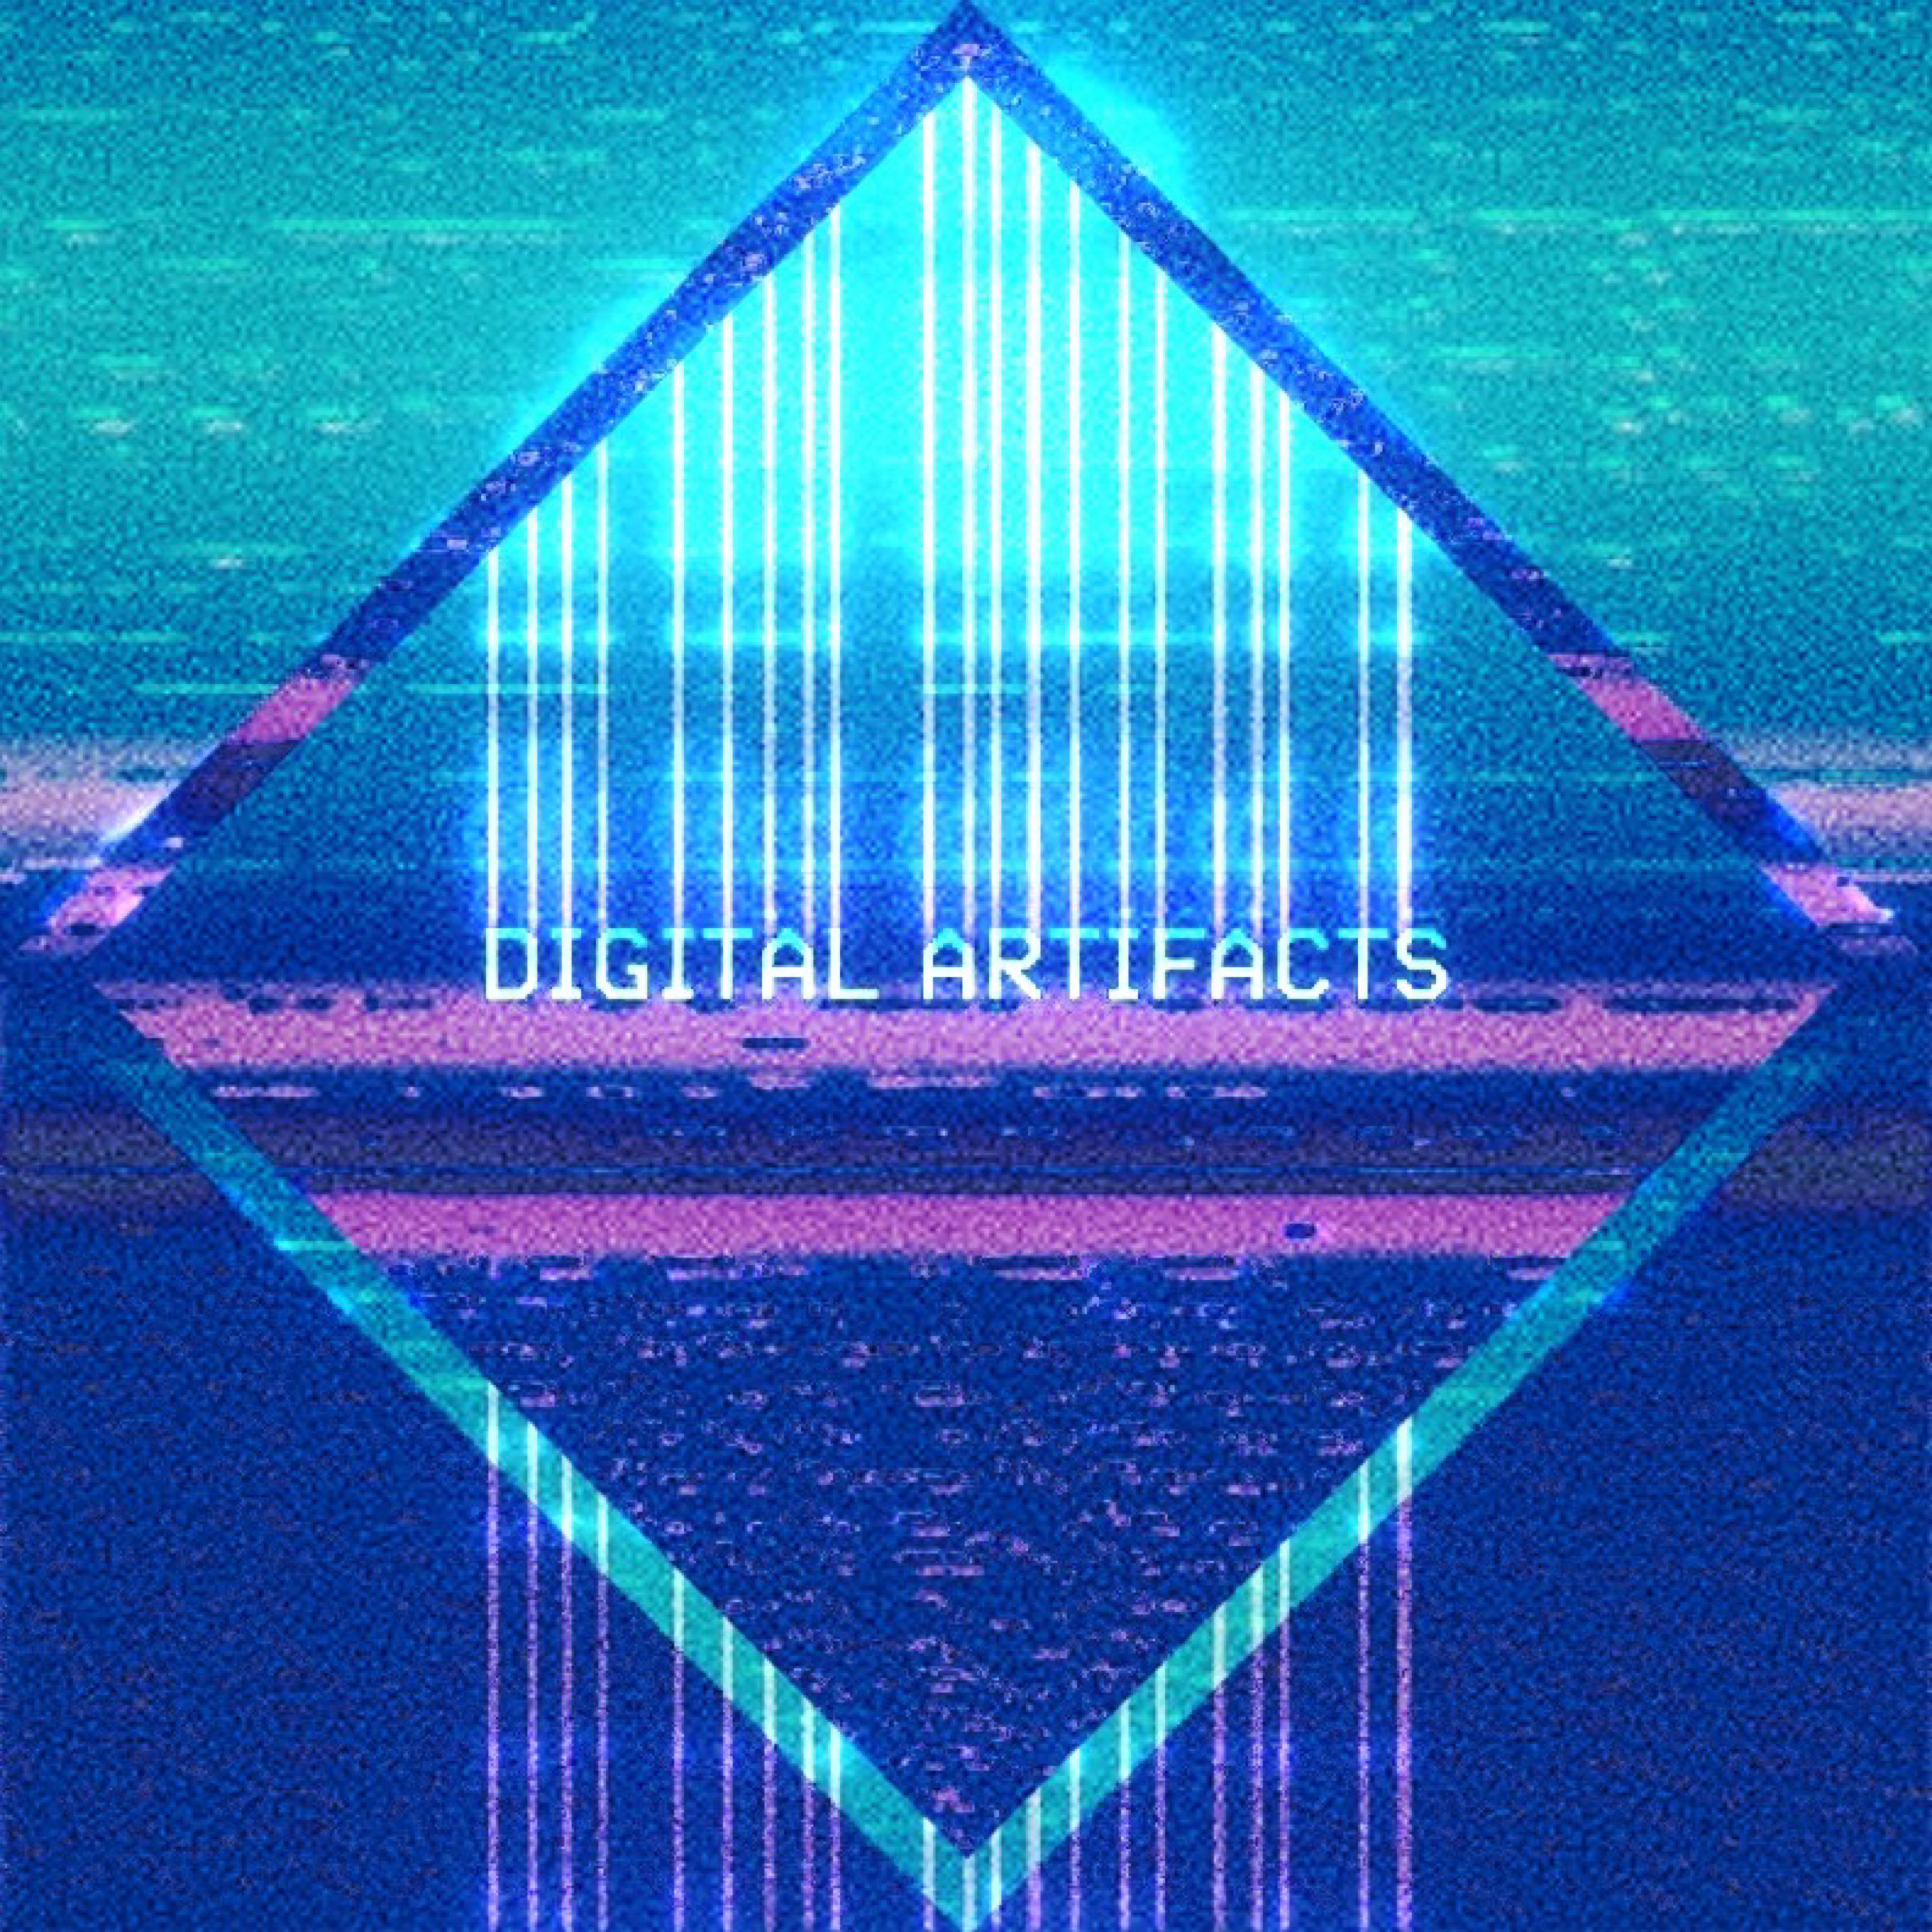 Digital Artifacts